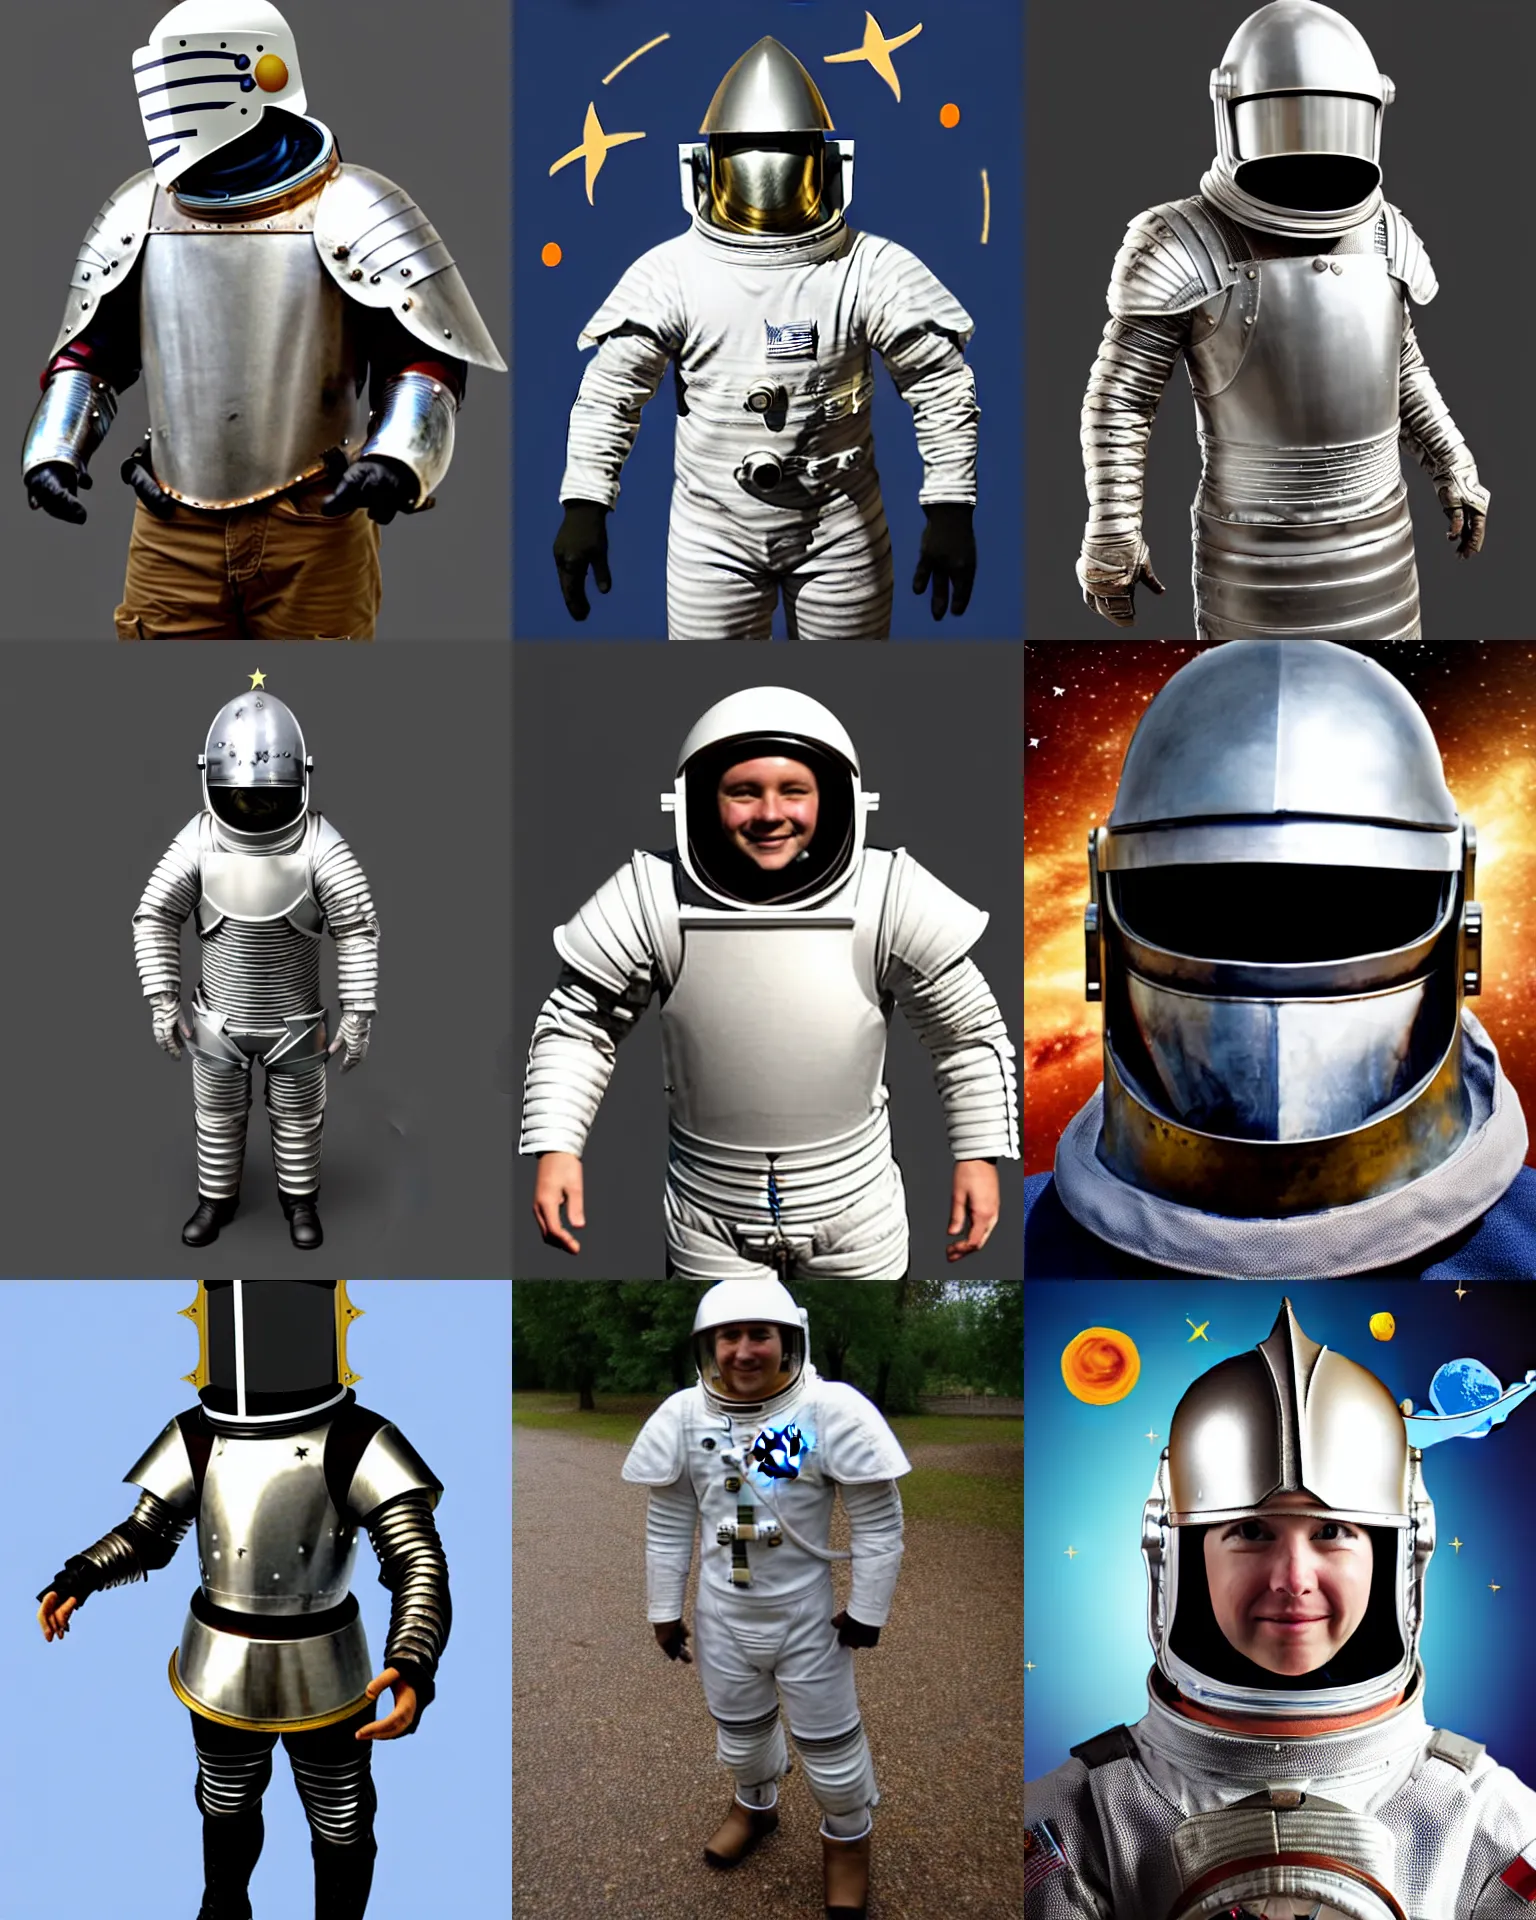 Prompt: modern astronut, wearing medieval knight helmet